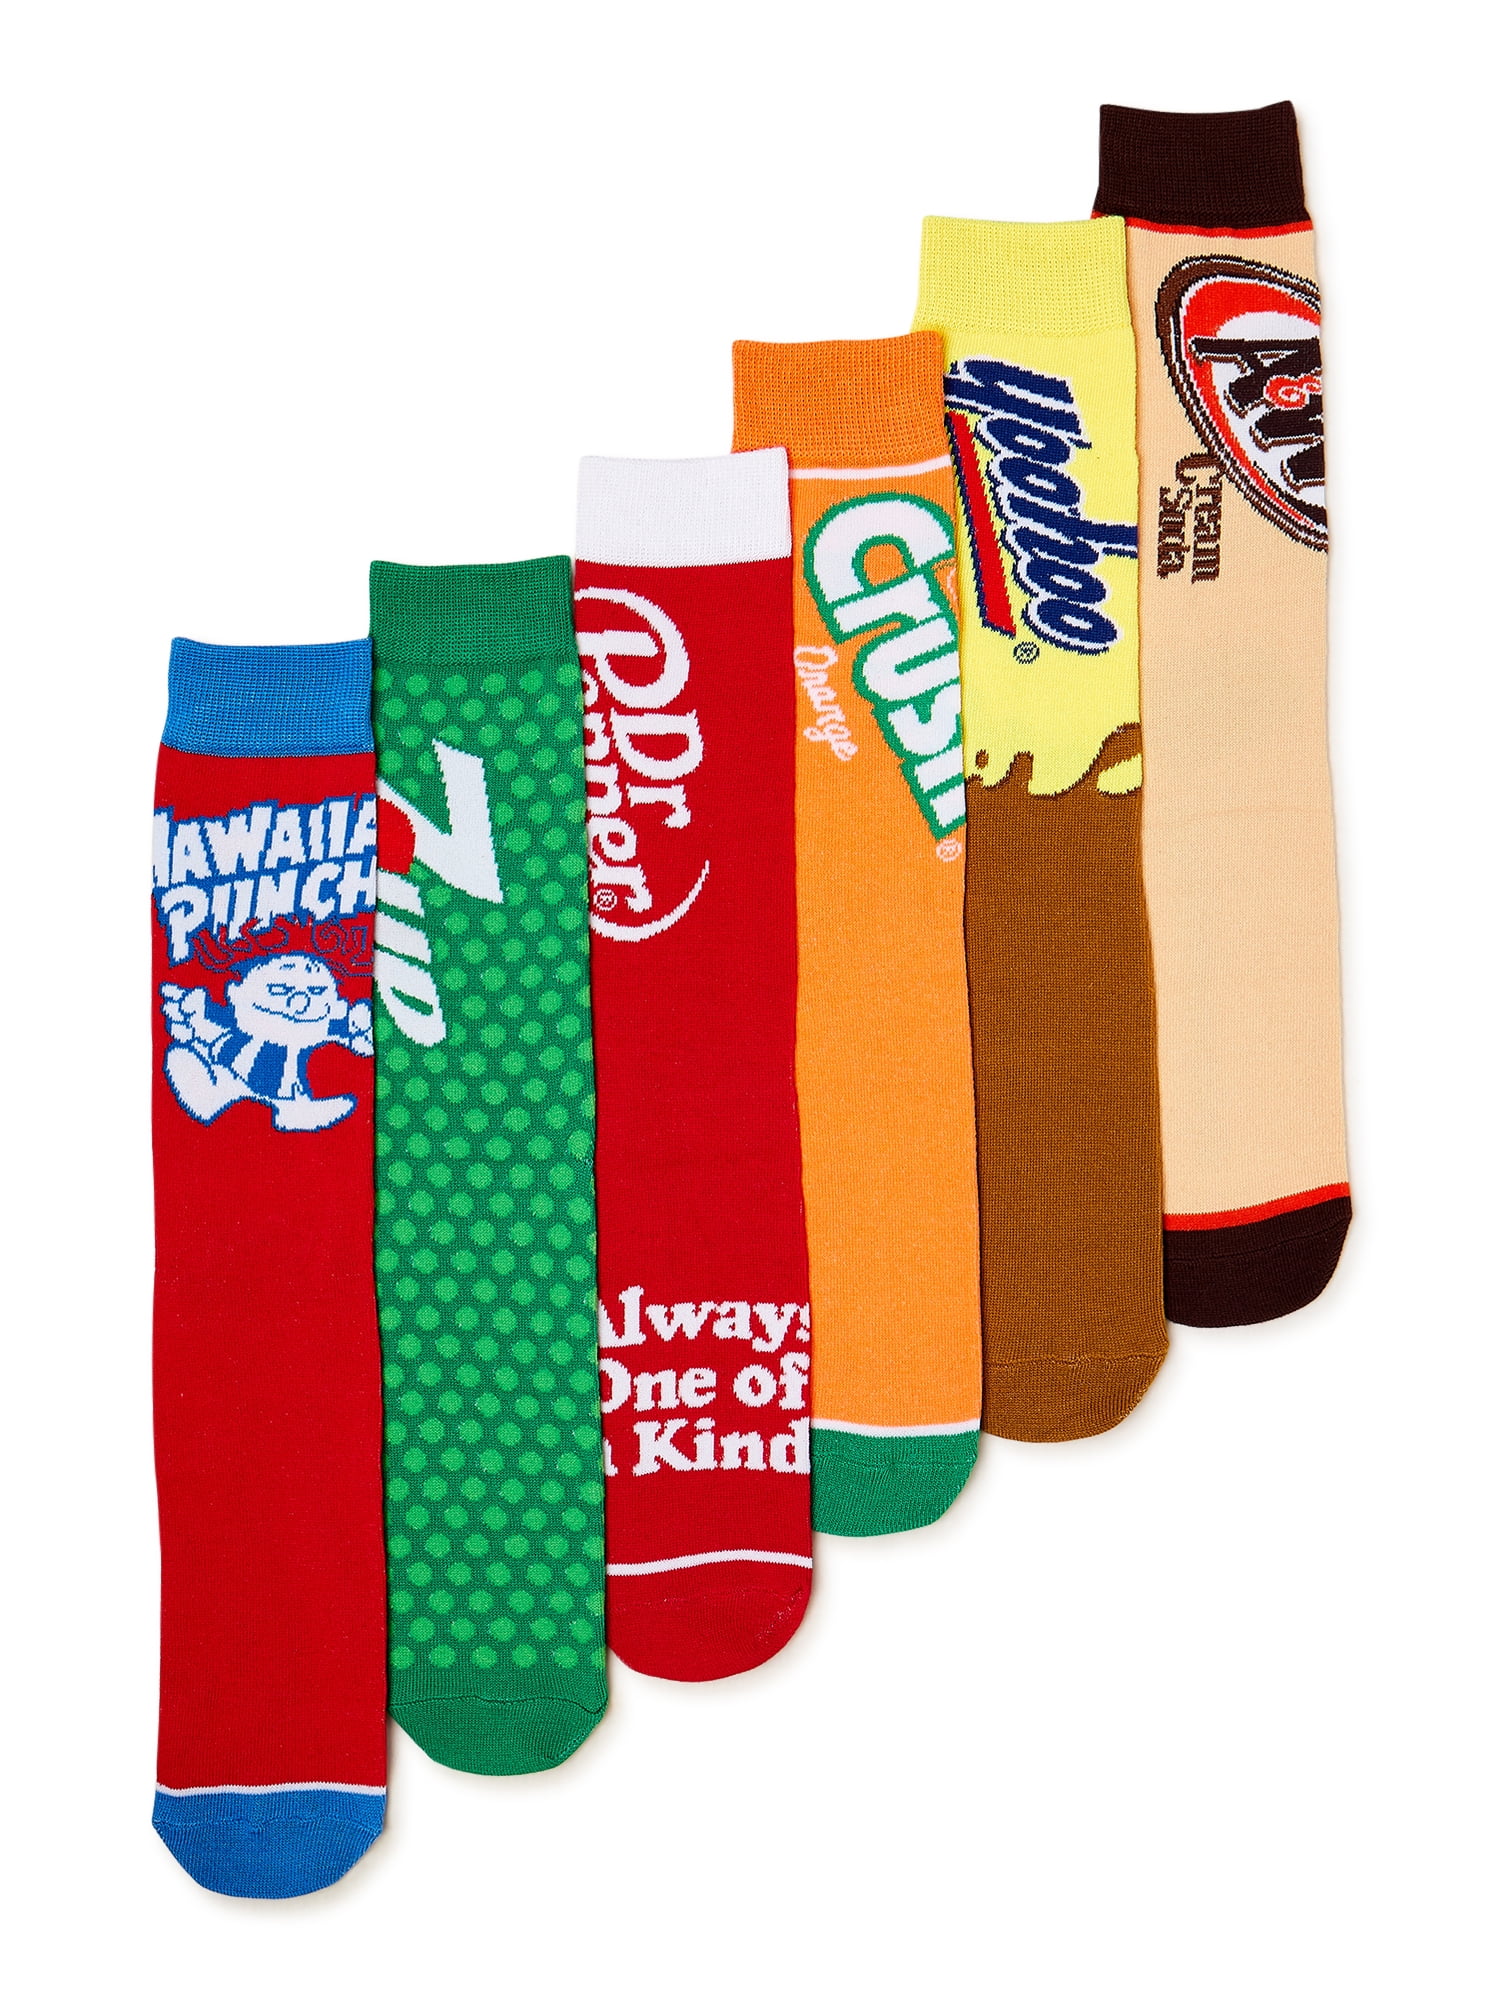 Cool Socks Dr Pepper Retro Fun Print Novelty Crew Socks for Men - Walmart .com